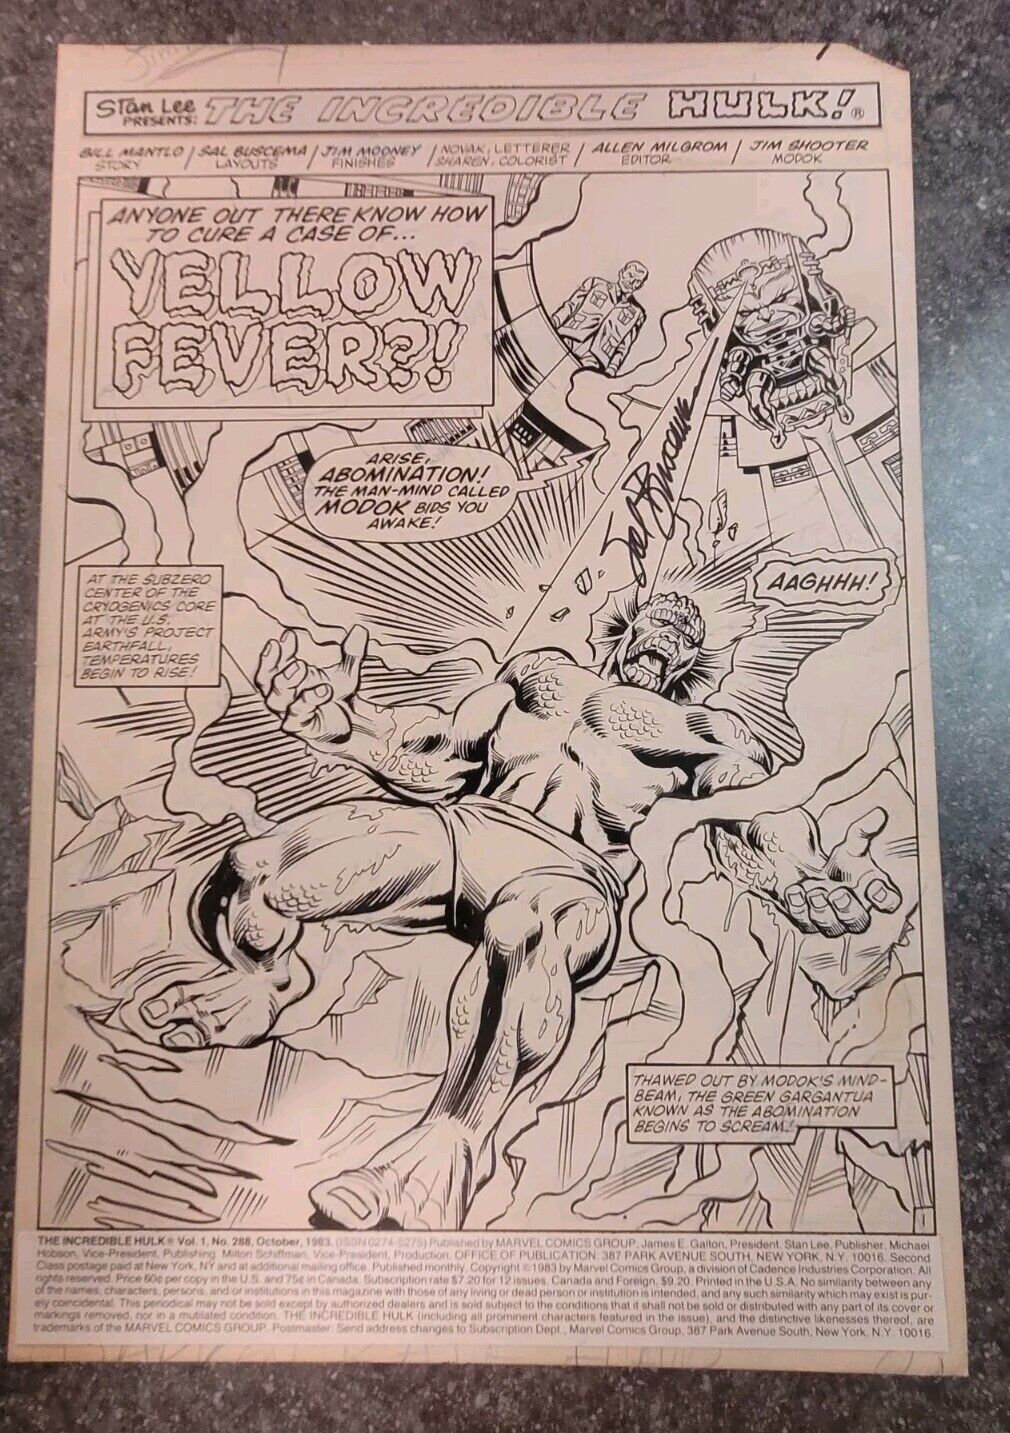 Incredible Hulk 288 SPLASH PAGE pg 1 ORIGINAL ART signed sal BUSCEMA 1983